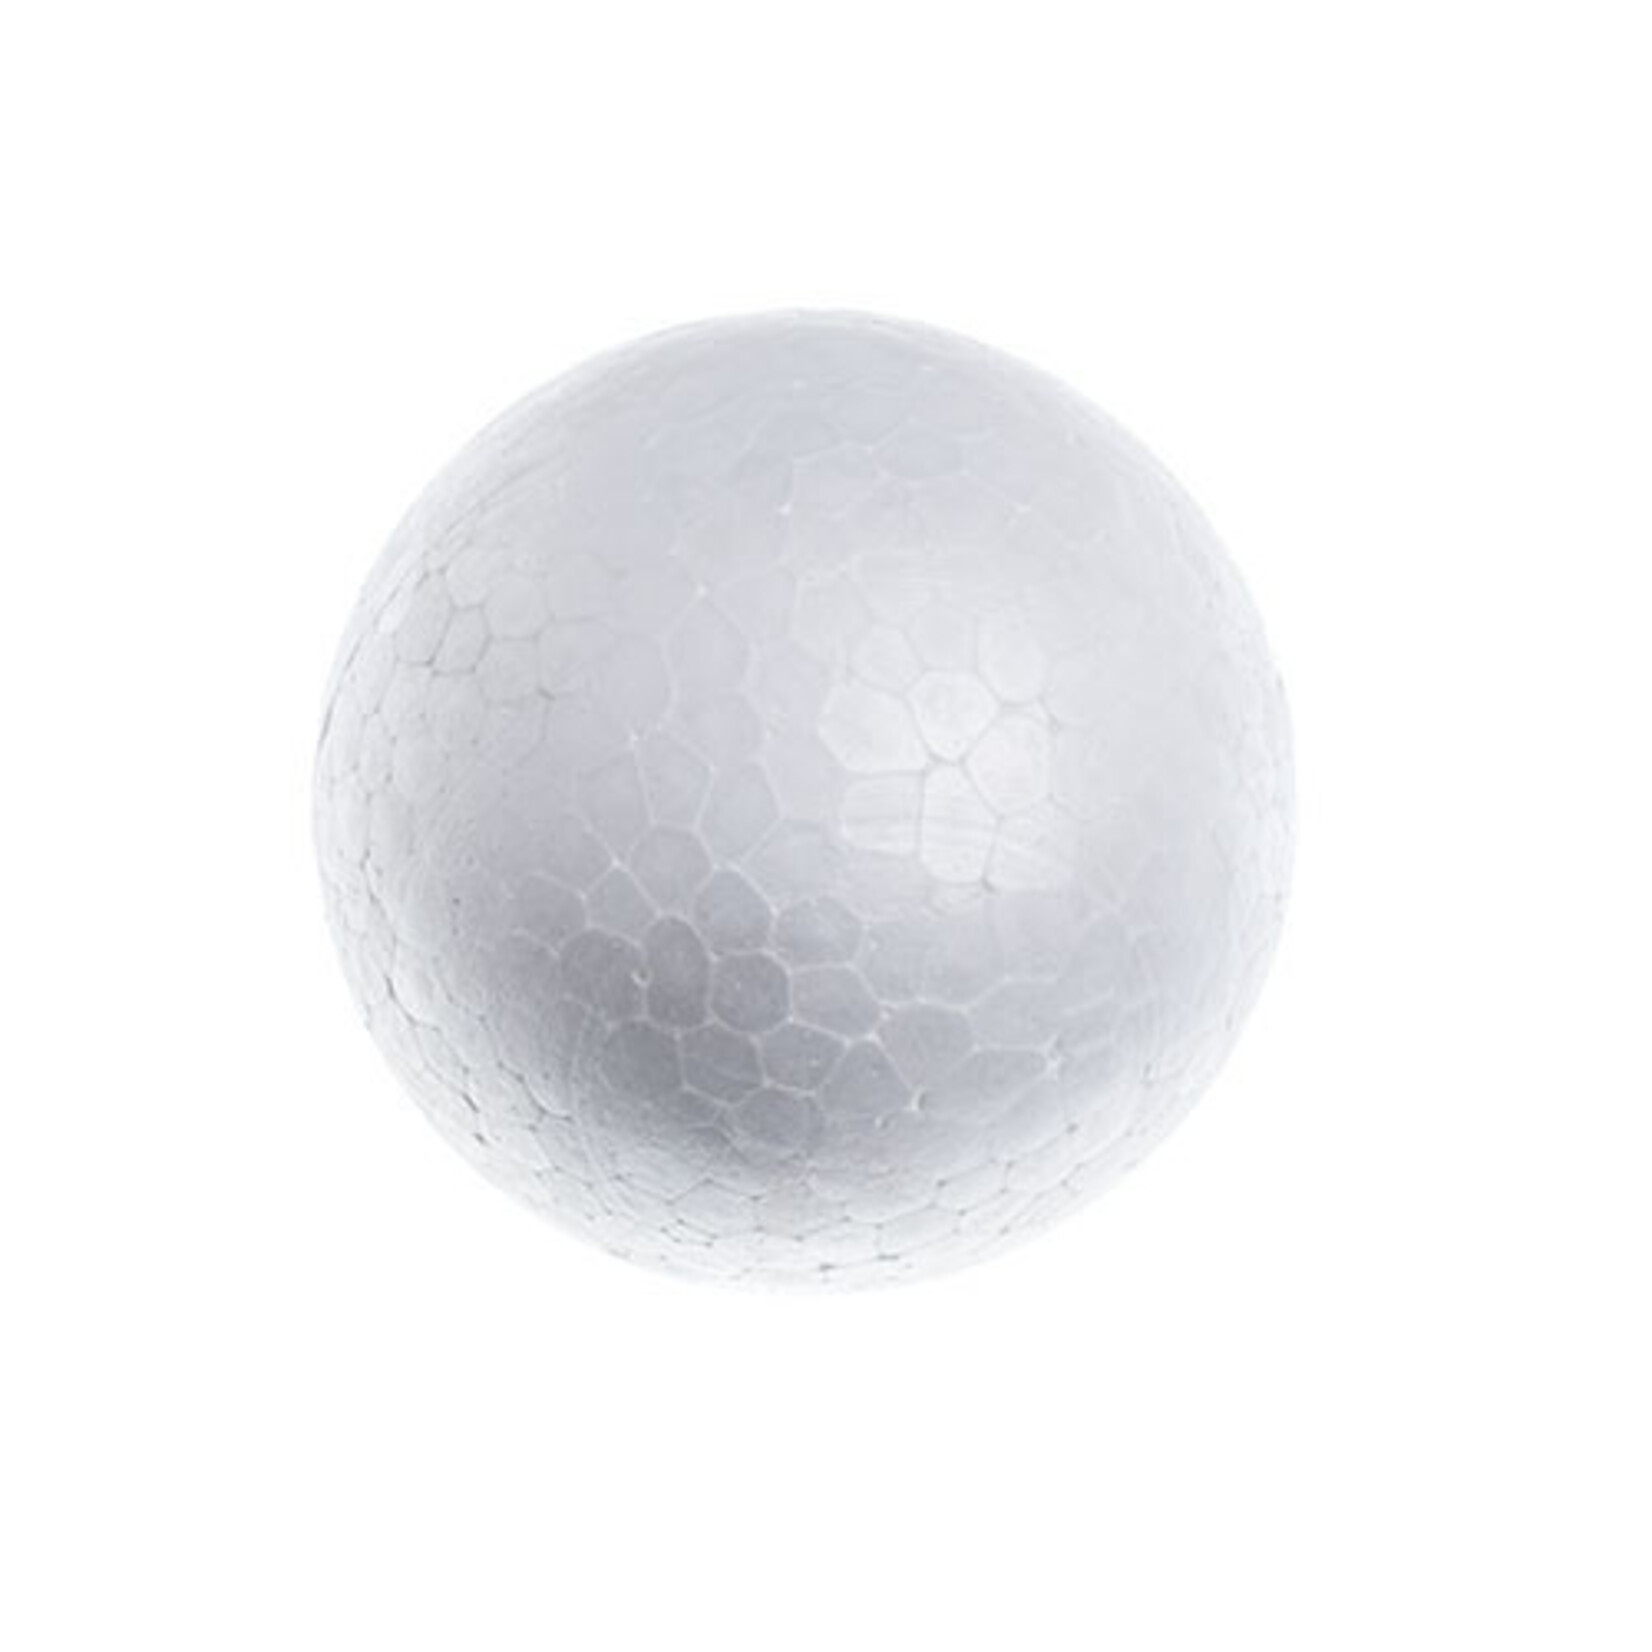 Dylite Styrofoam Ball White 3 Inches Round